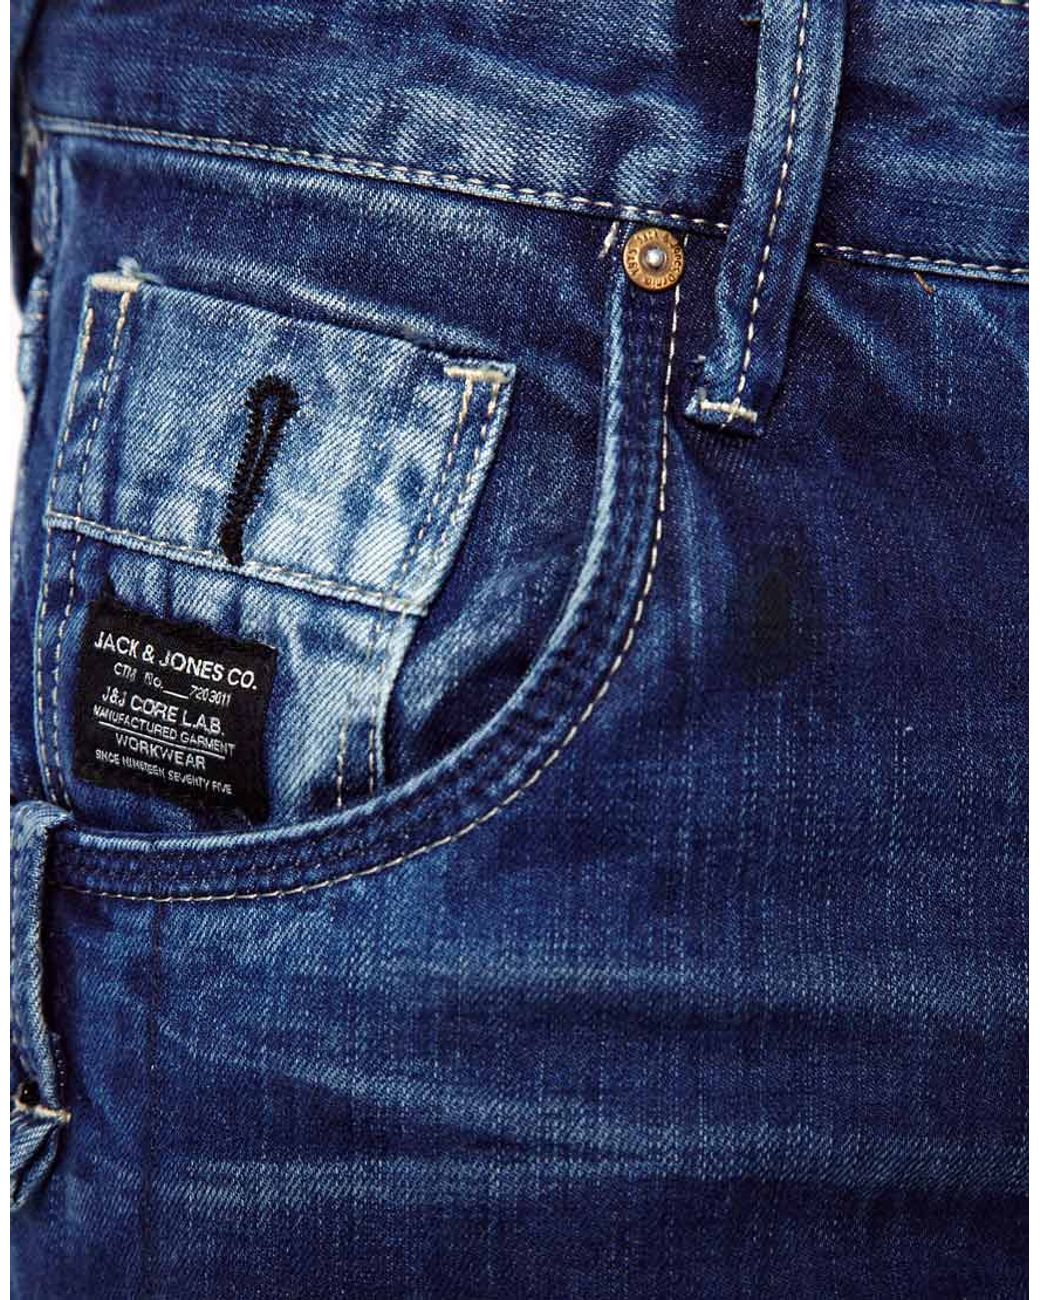 Buy Jack & Jones First Copy Jeans online from Bachat Bazaar Family